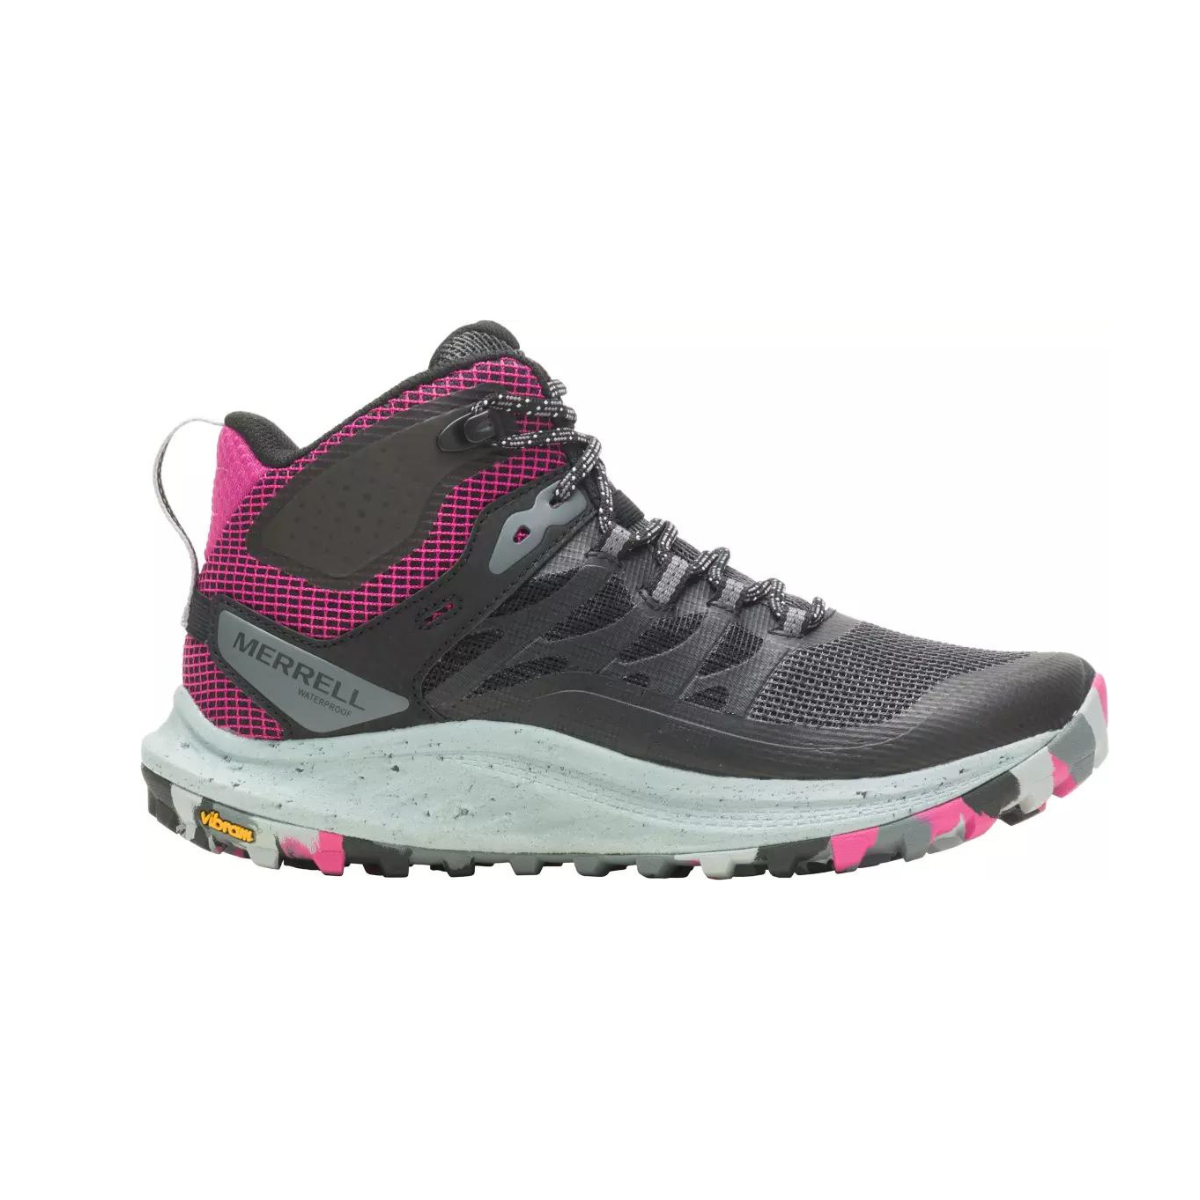 Merrell, Antora 3 Mid Waterproof Hiking Boots, Women, Black/Fuchsia